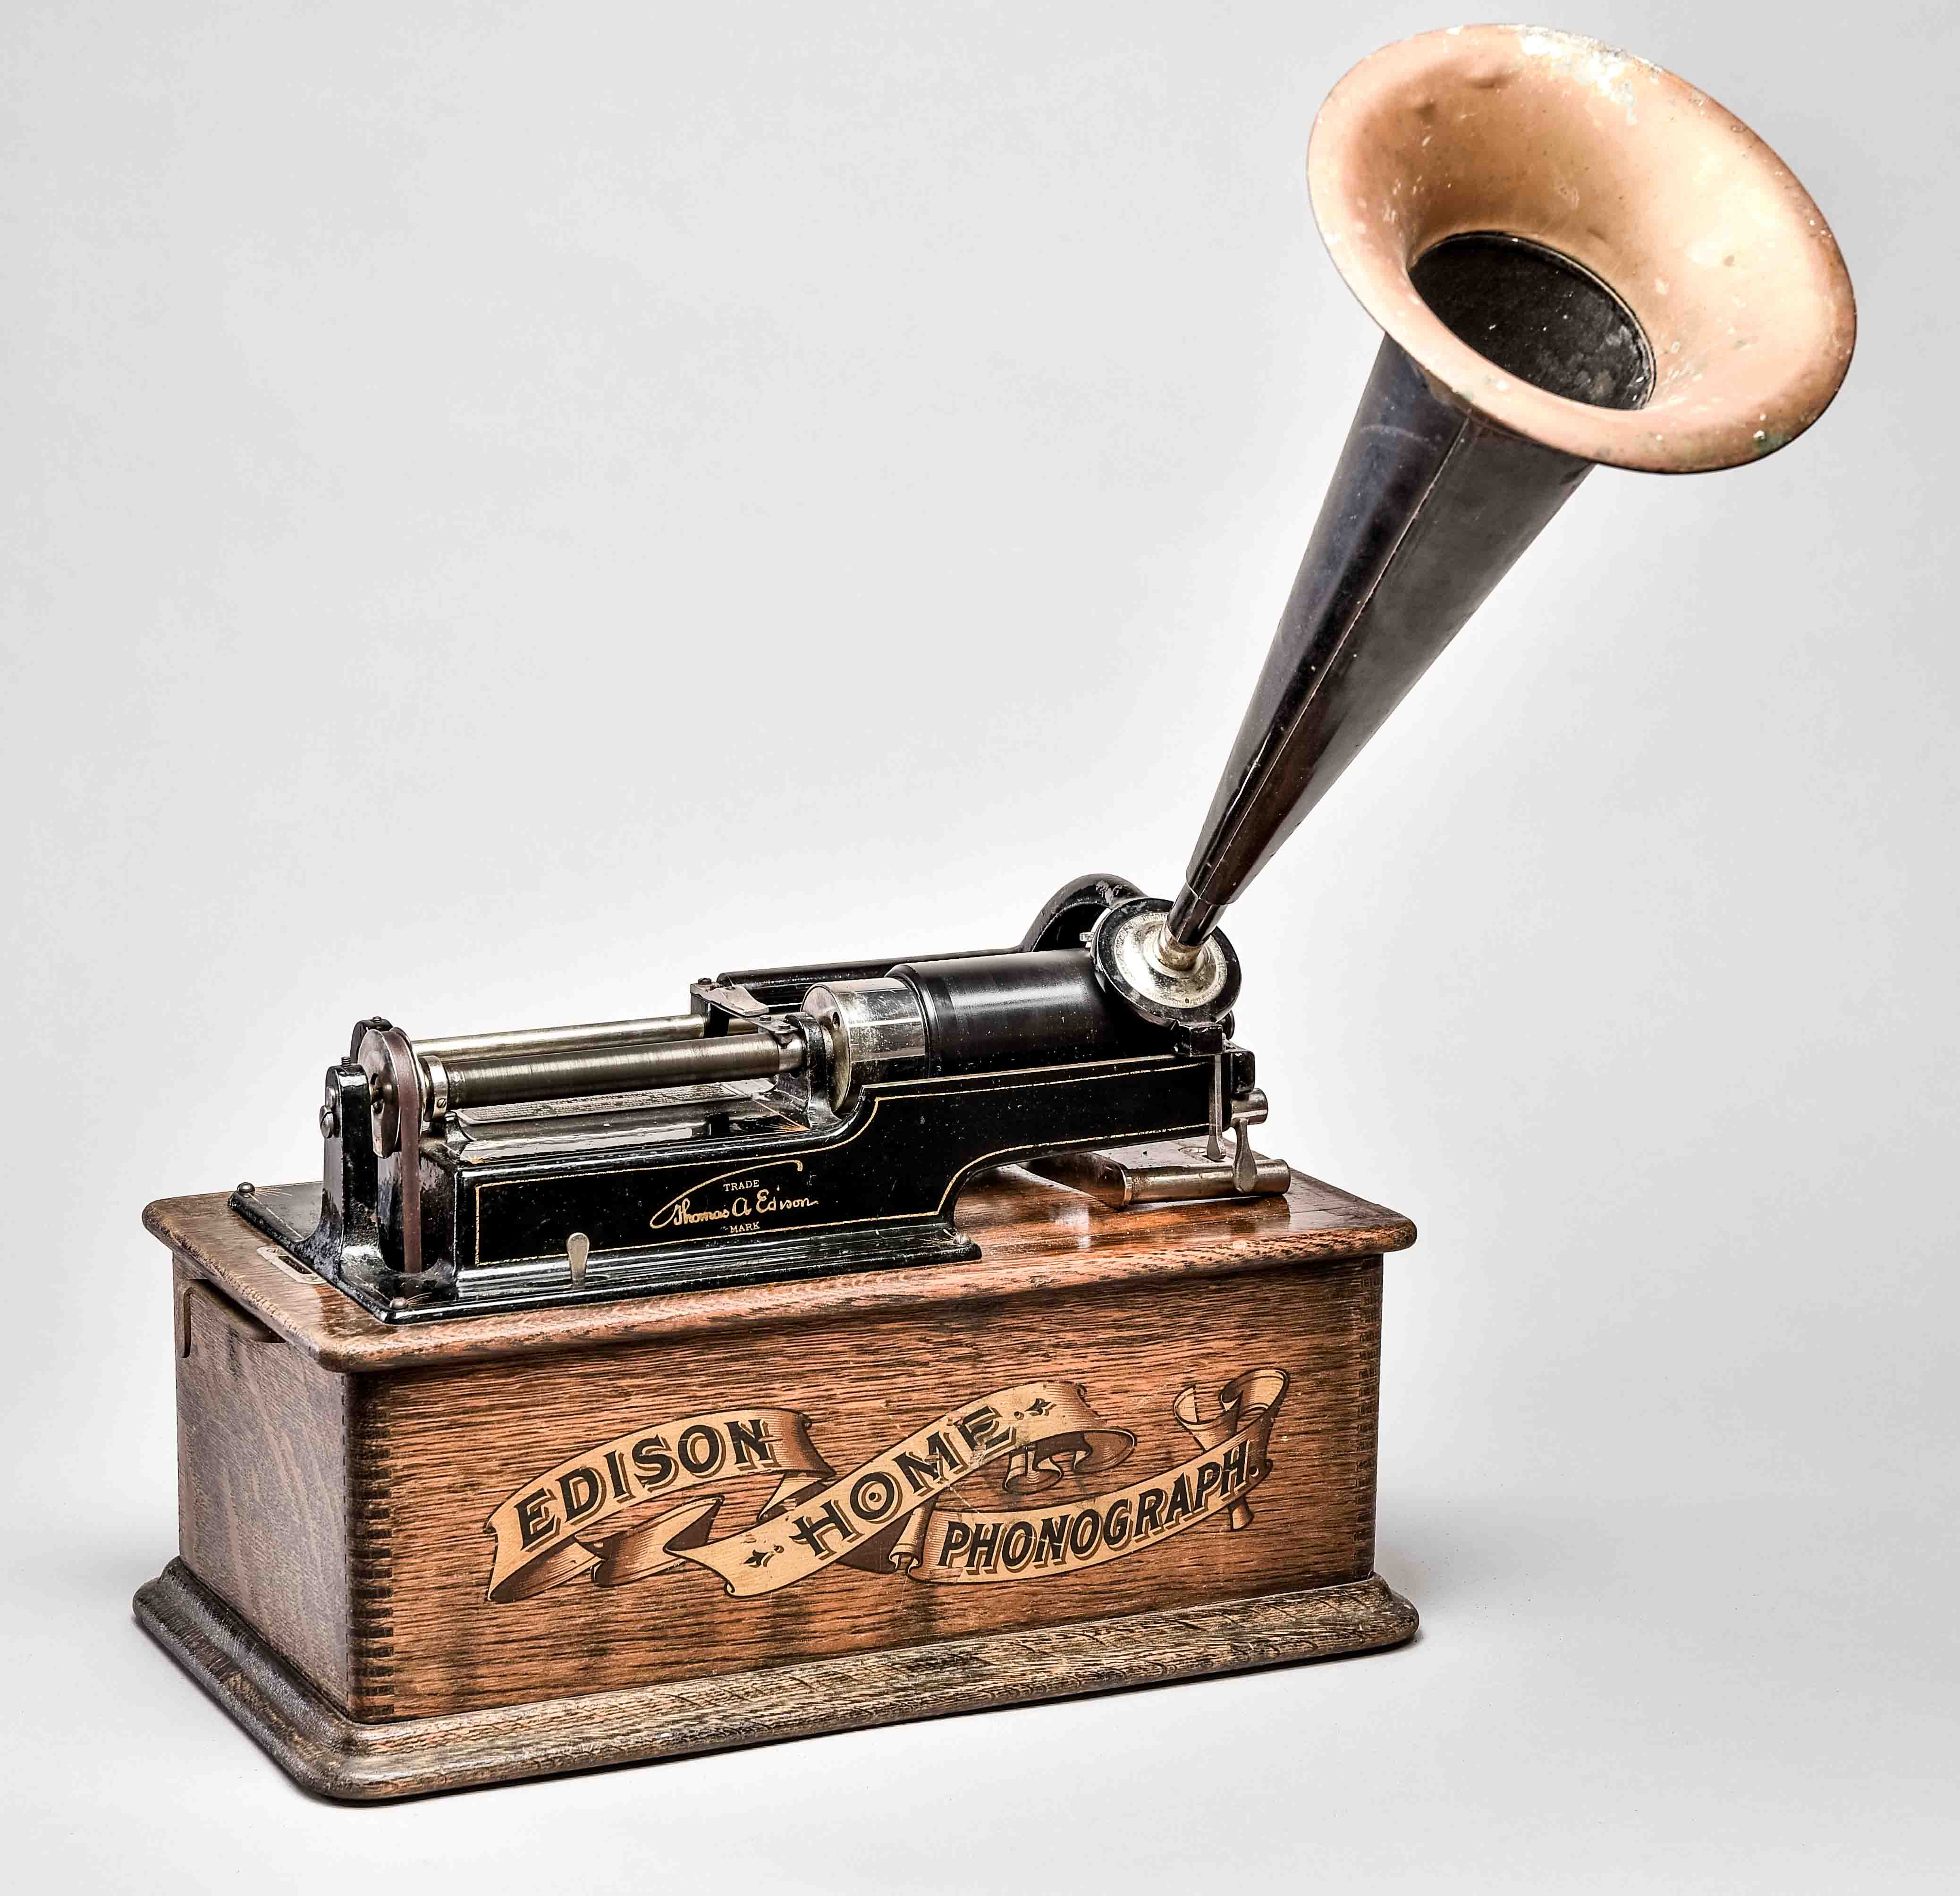 Original Edison phonograph, USA around 1900, cylinder phonograph, model "Standard", with original f